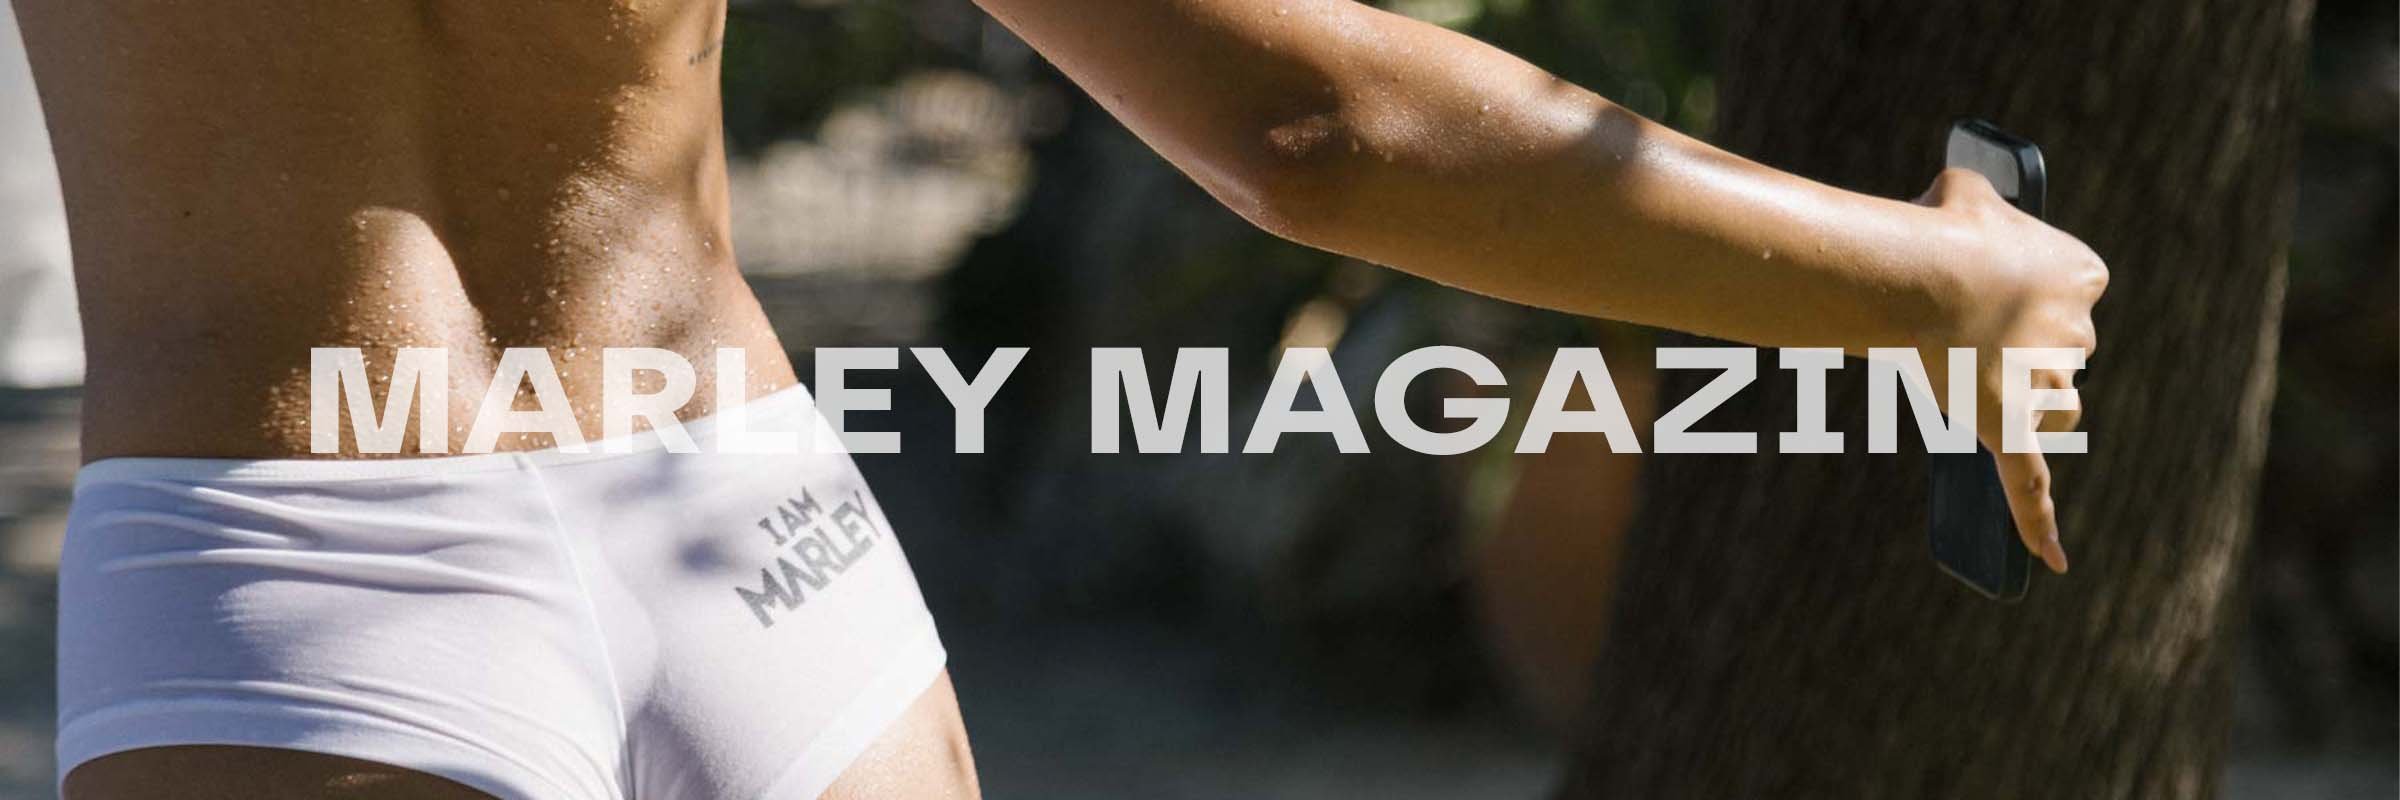 MARLEY Magazine - Banner 1_0024_MARLEY MAGAZINE.jpg